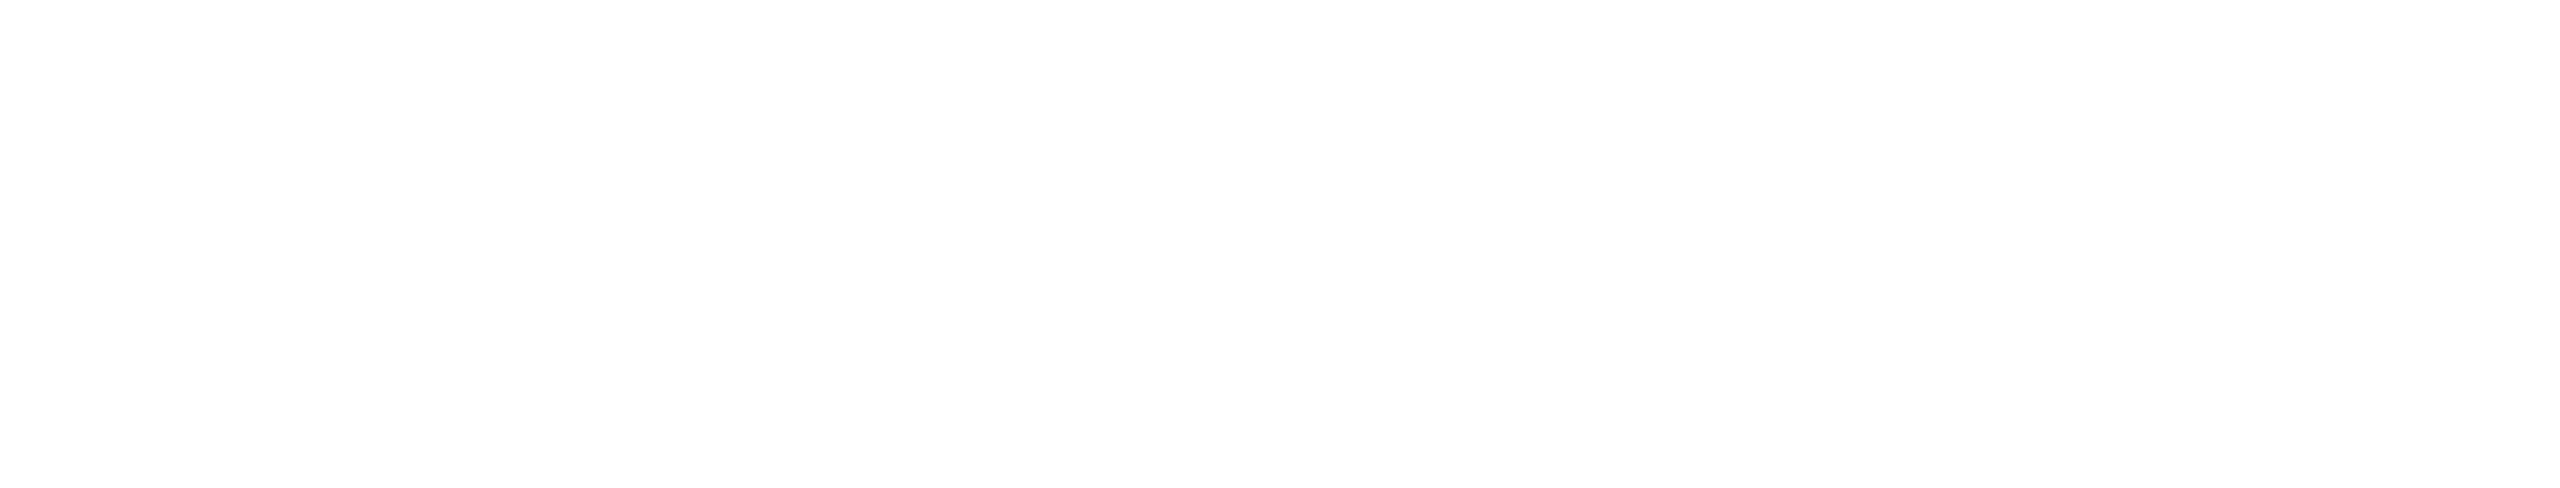 tezenis-logo.png